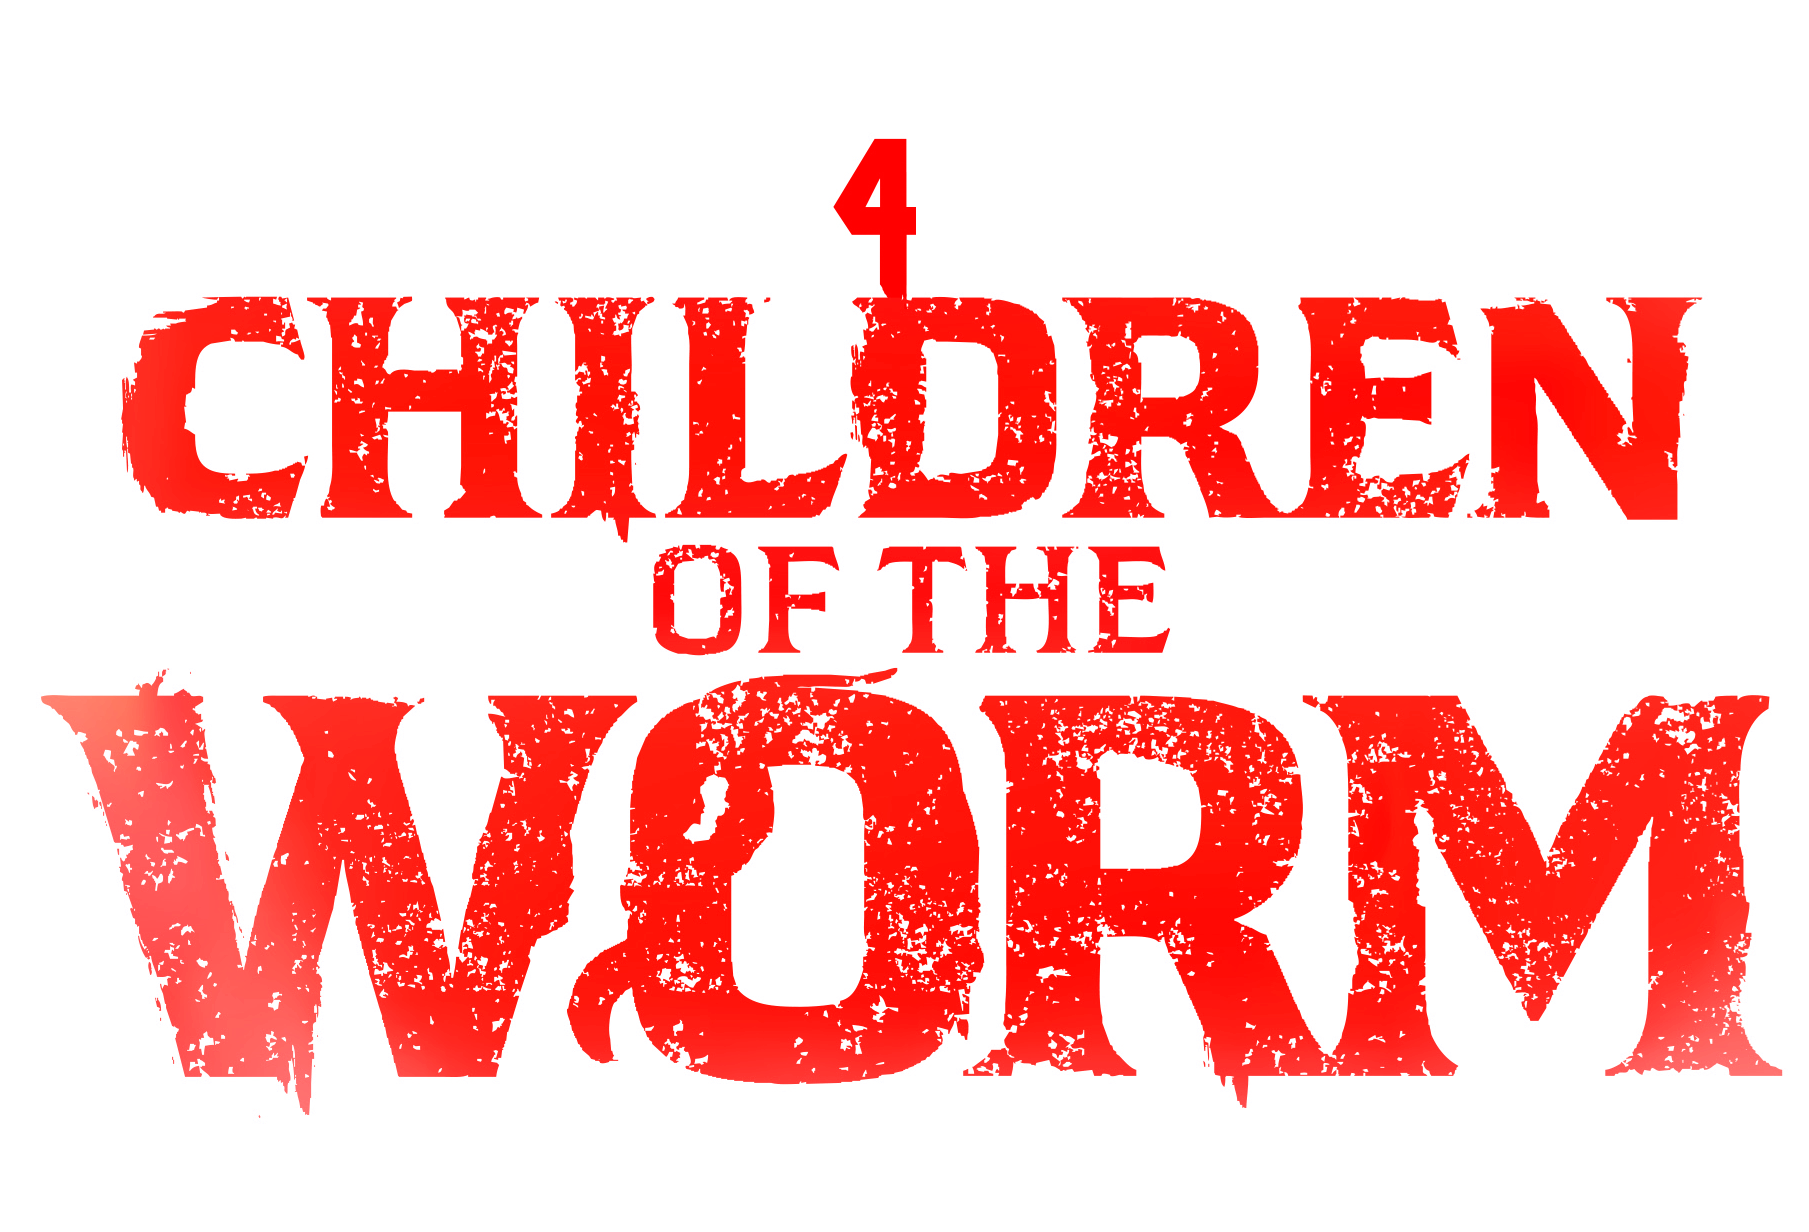 Back 4 Blood - Campaign Trailer 